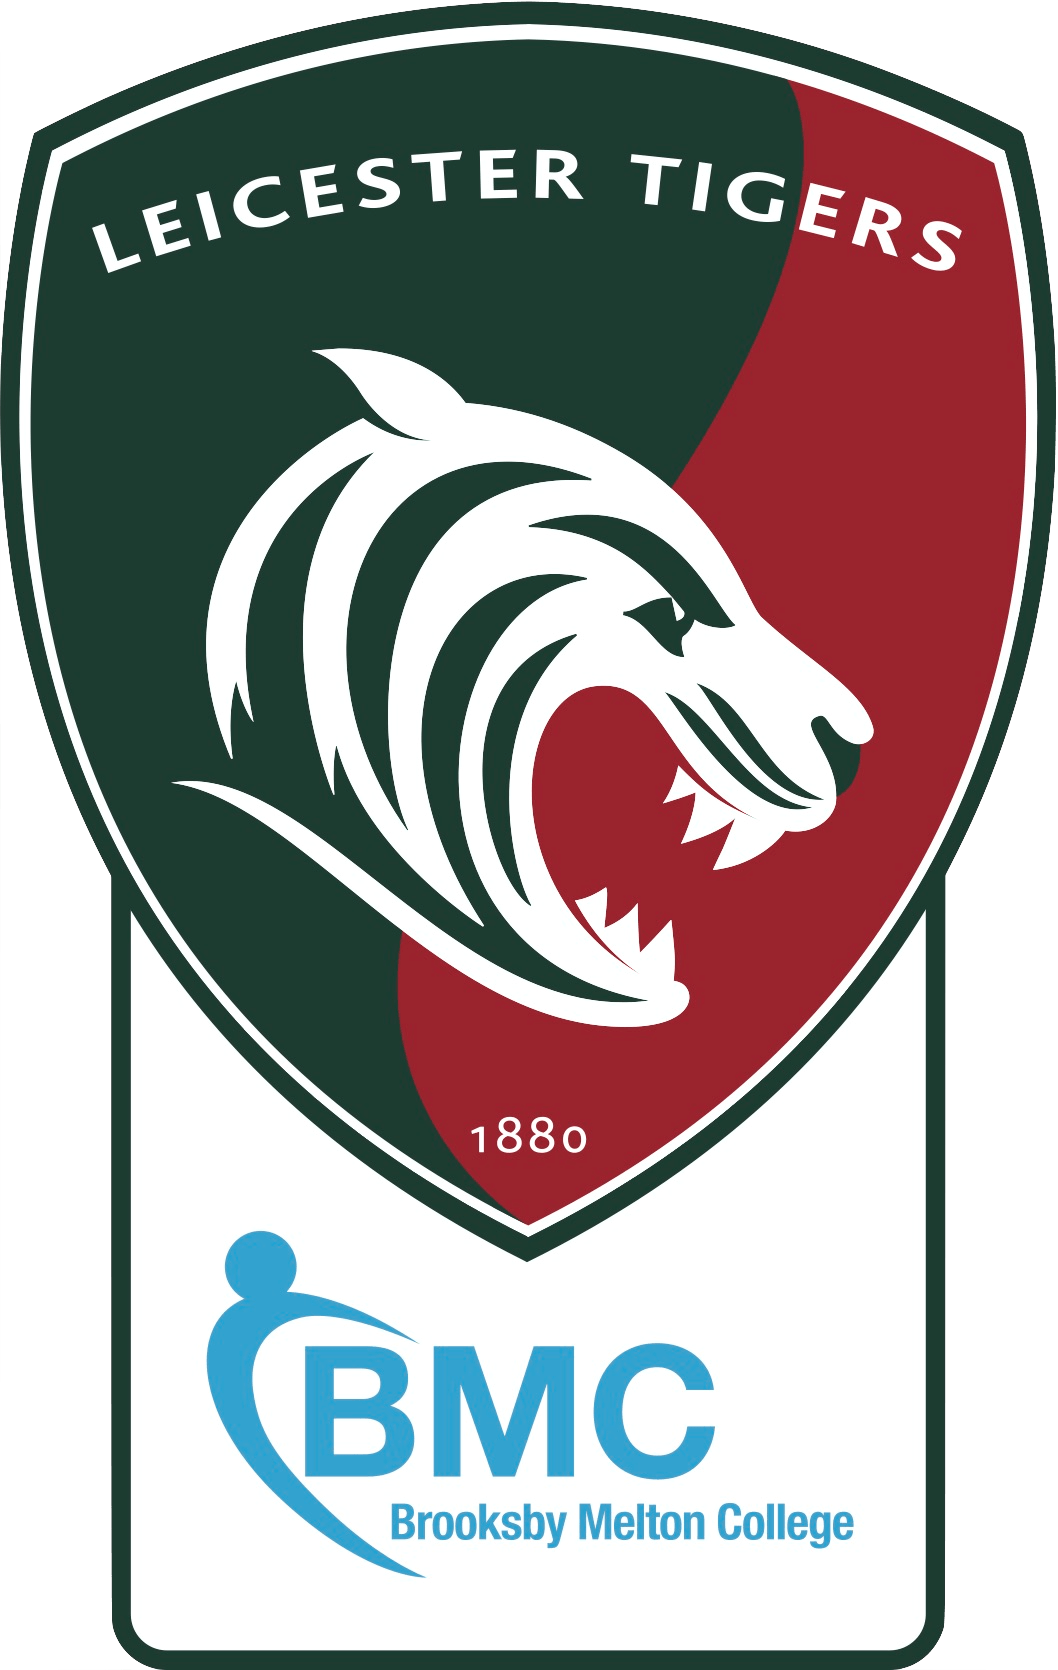 Partnership Logo - Tigers partnership logo - Brooksby Melton College